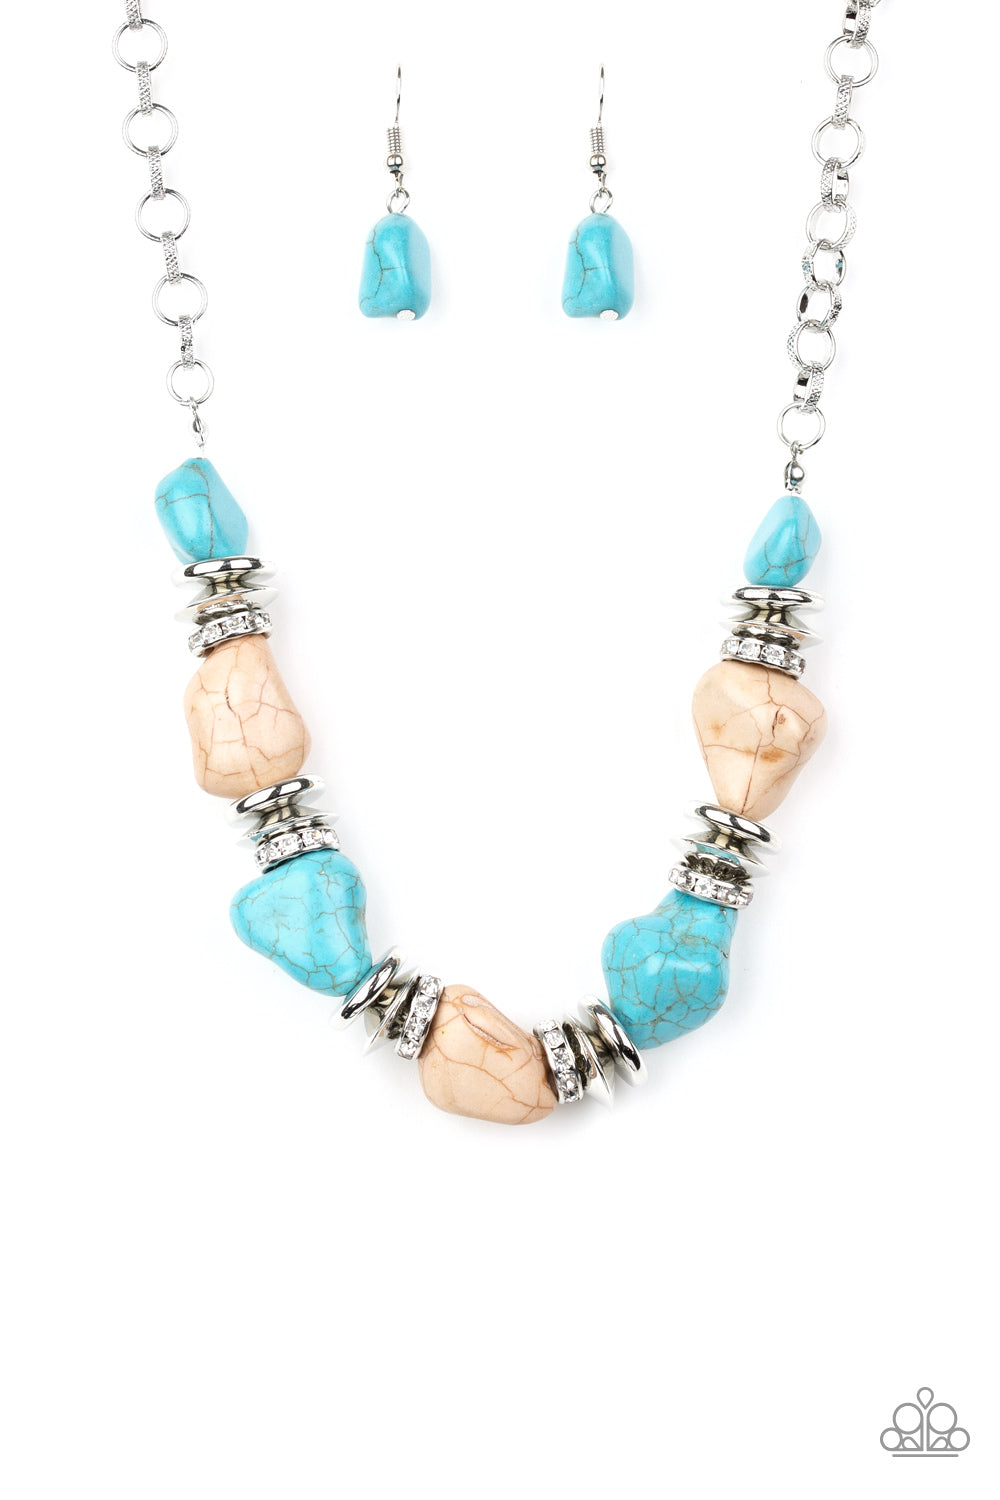 Stunningly Stone Age - Blue Multi necklace